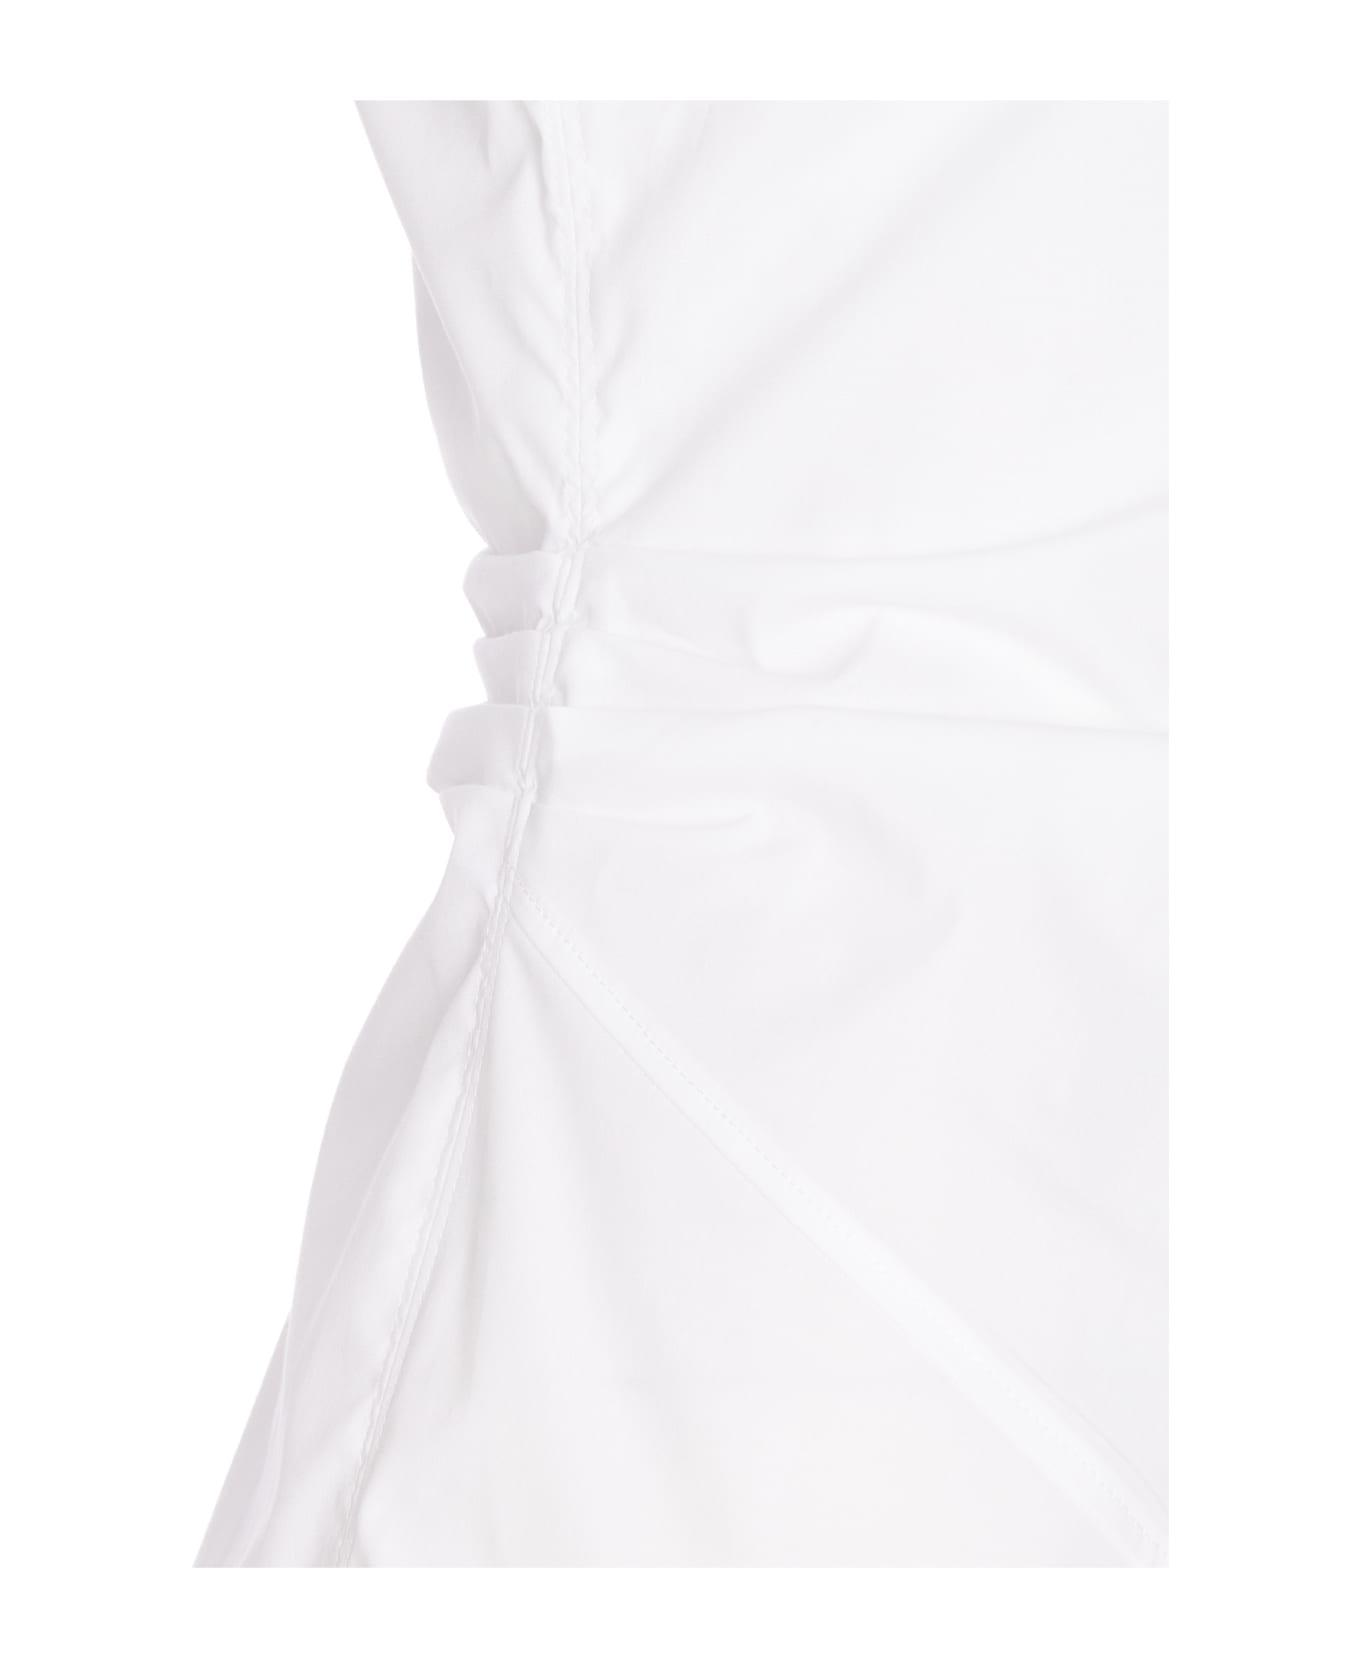 Dondup Sleeveless Shirt - White シャツ